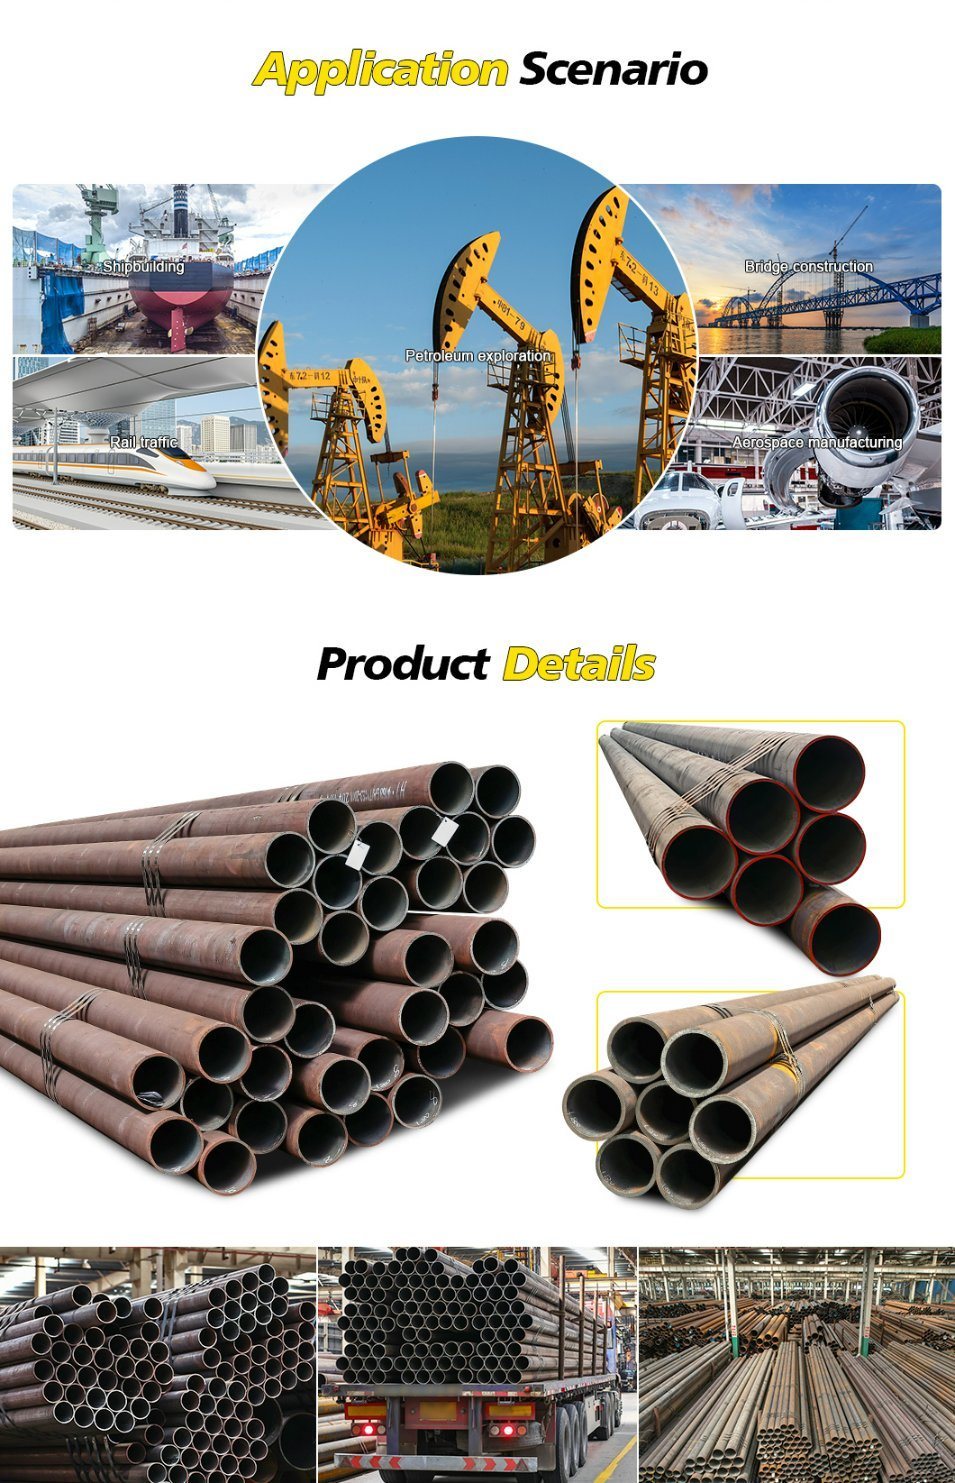 ASME SA106 Grade B Seamless Carbon Steel Pipe for High-Temperature Service